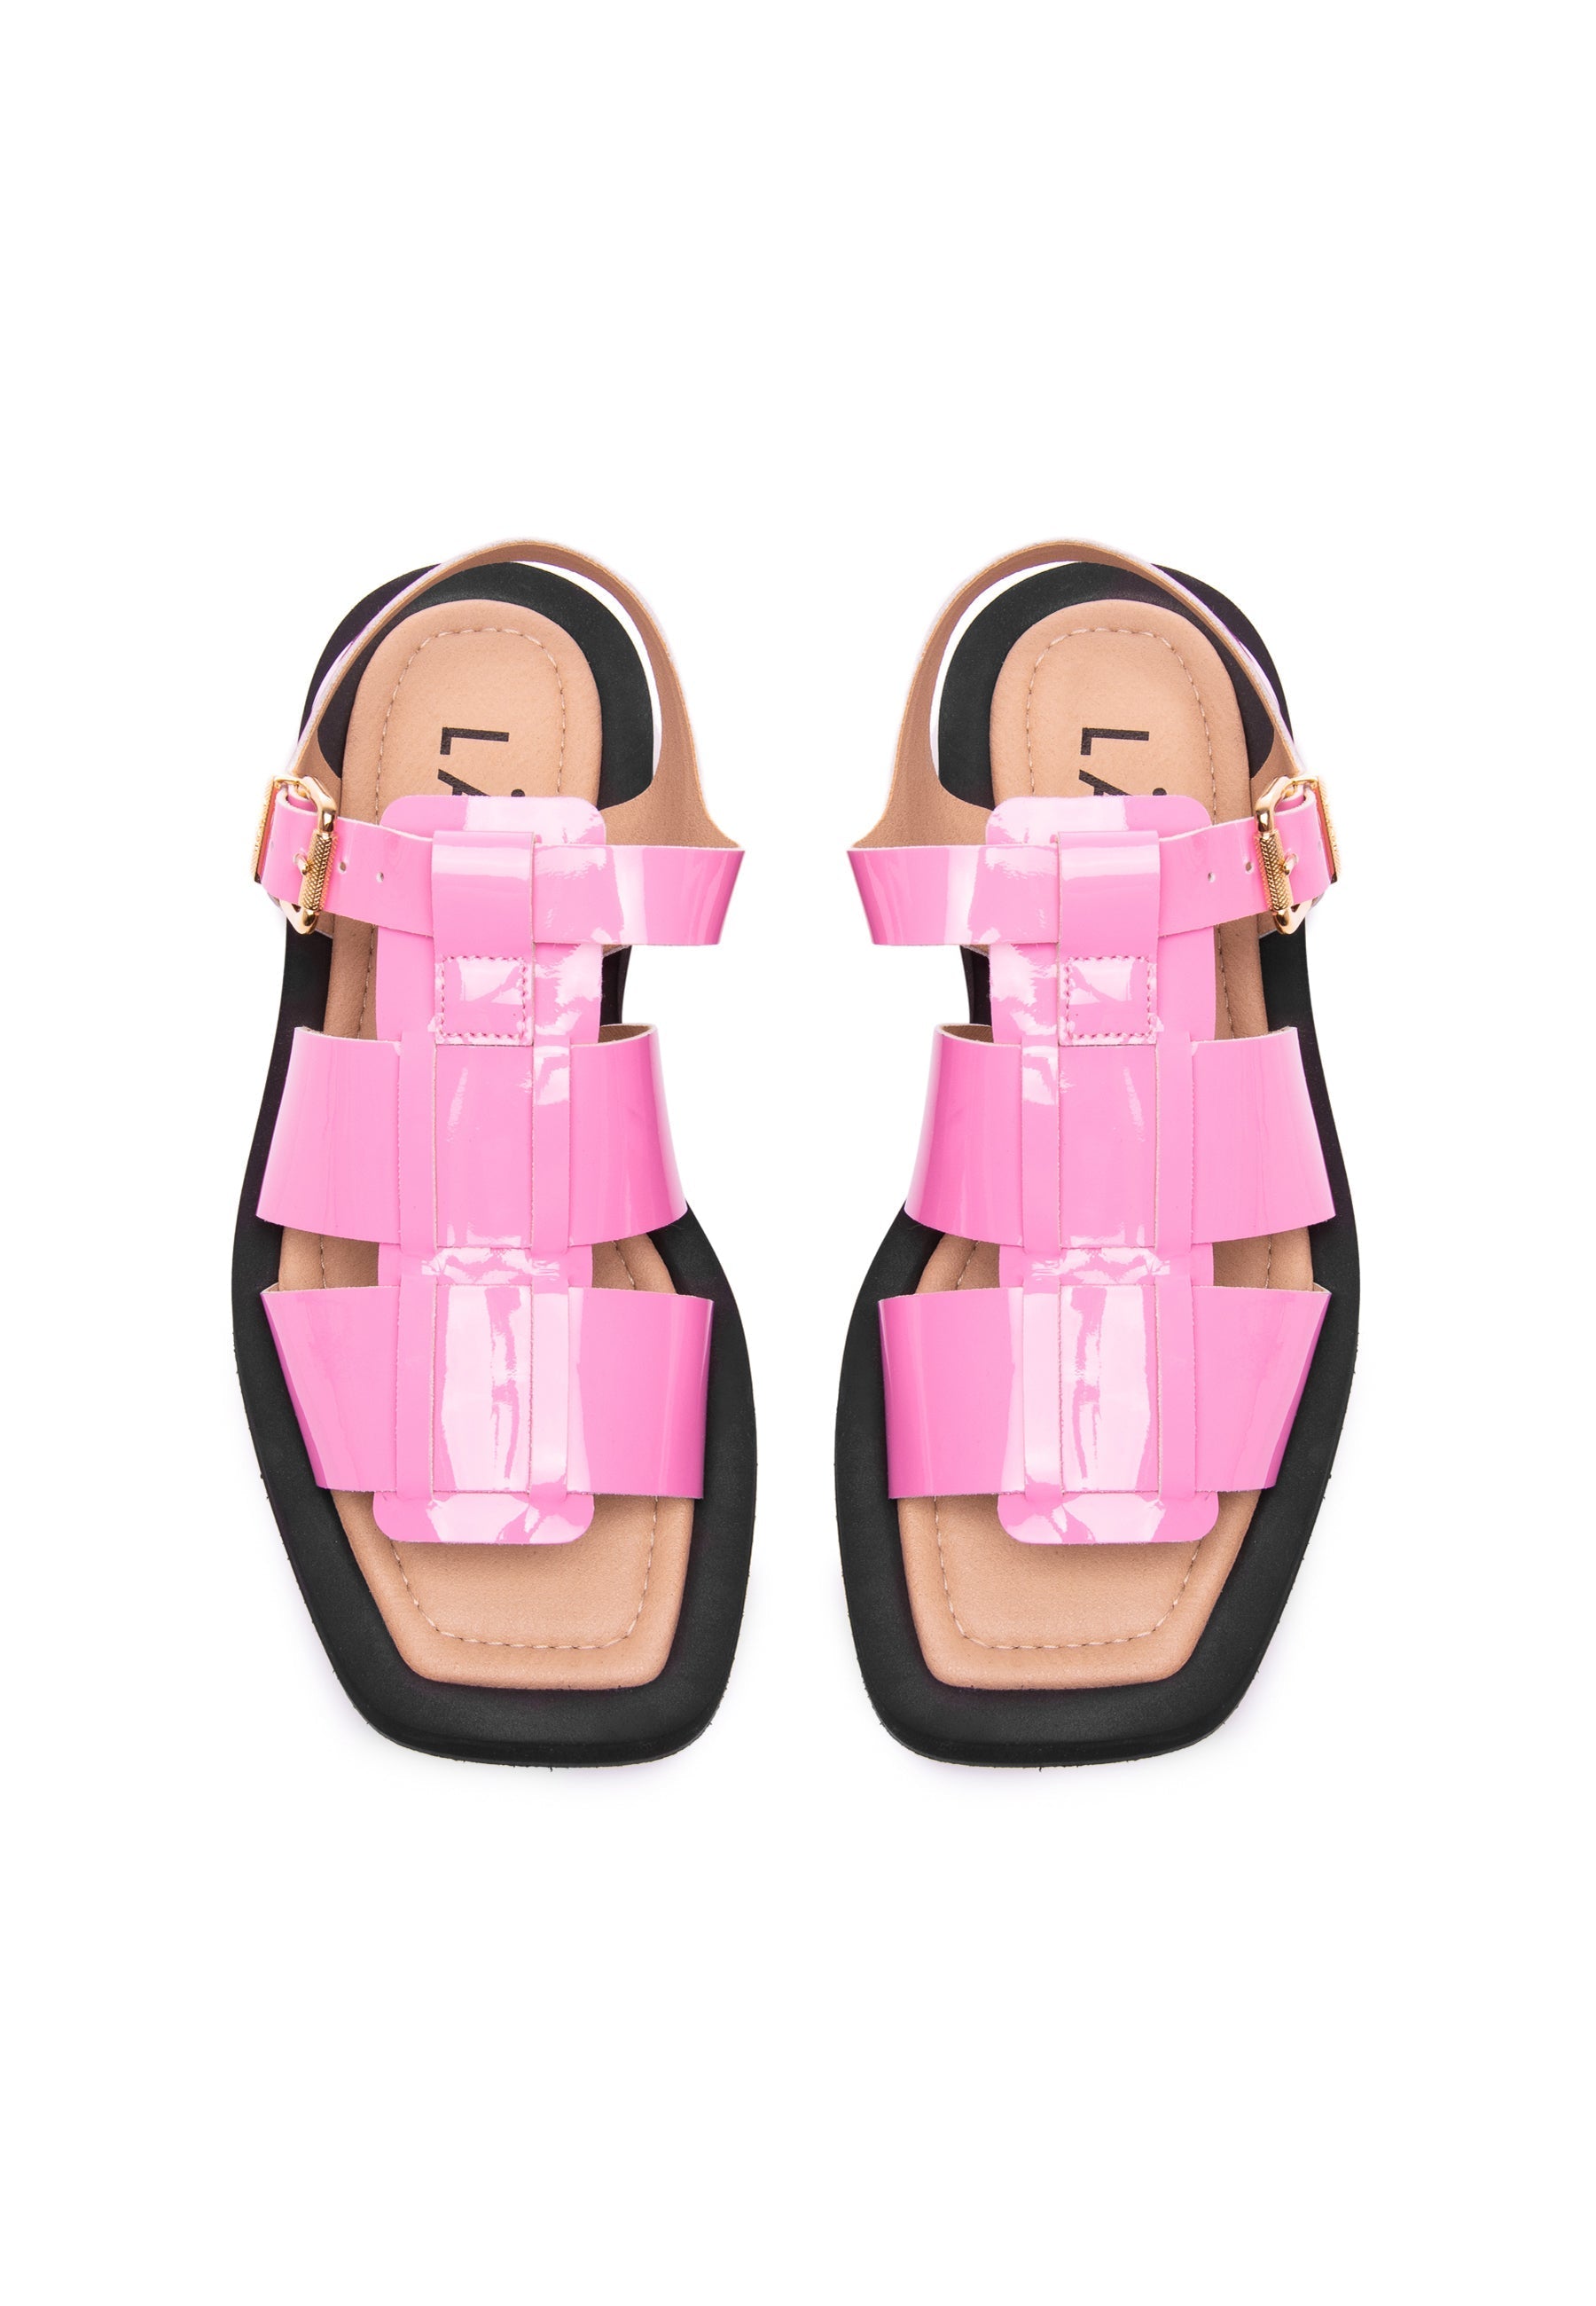 LÄST Samantha - Patent Leather - Pink Sandals Pink